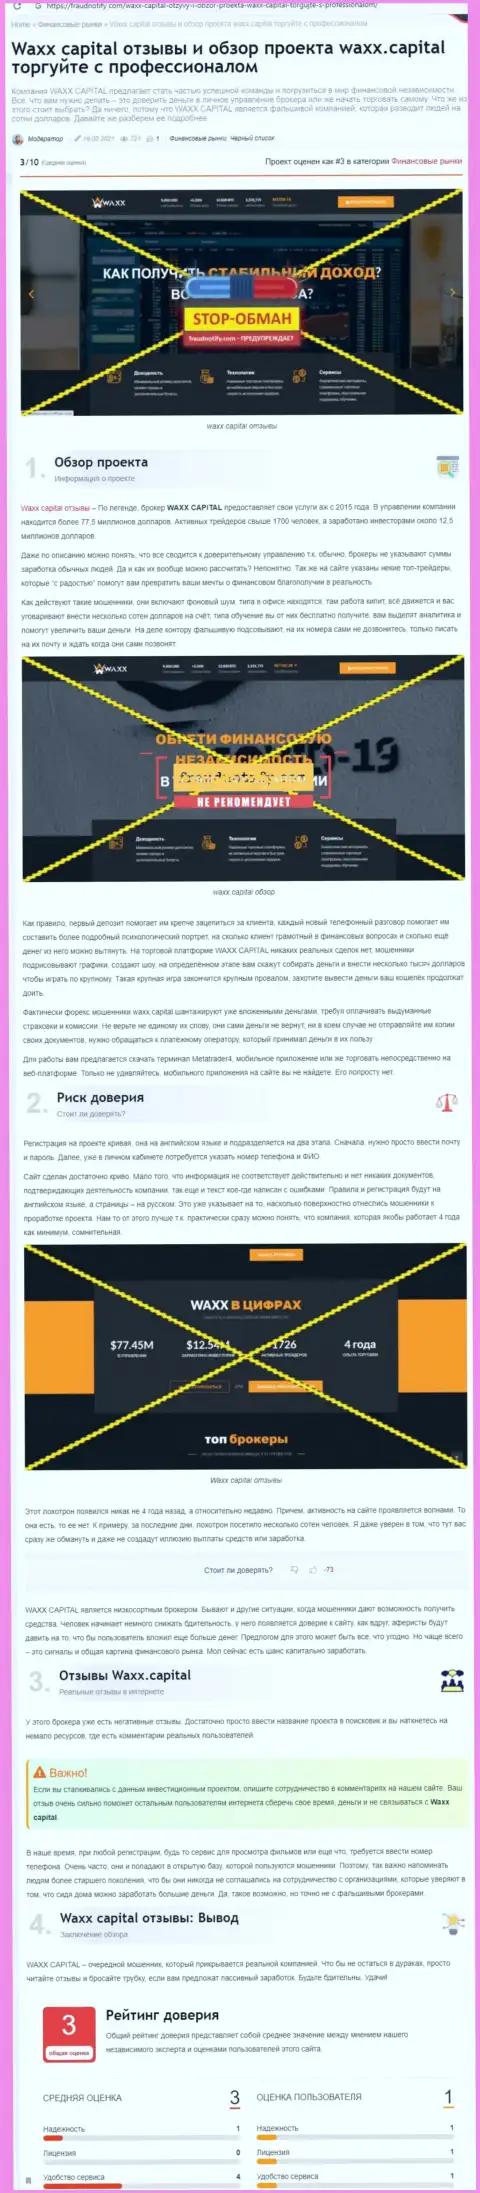 Подробный разбор методов обмана Waxx-Capital Net (обзор)